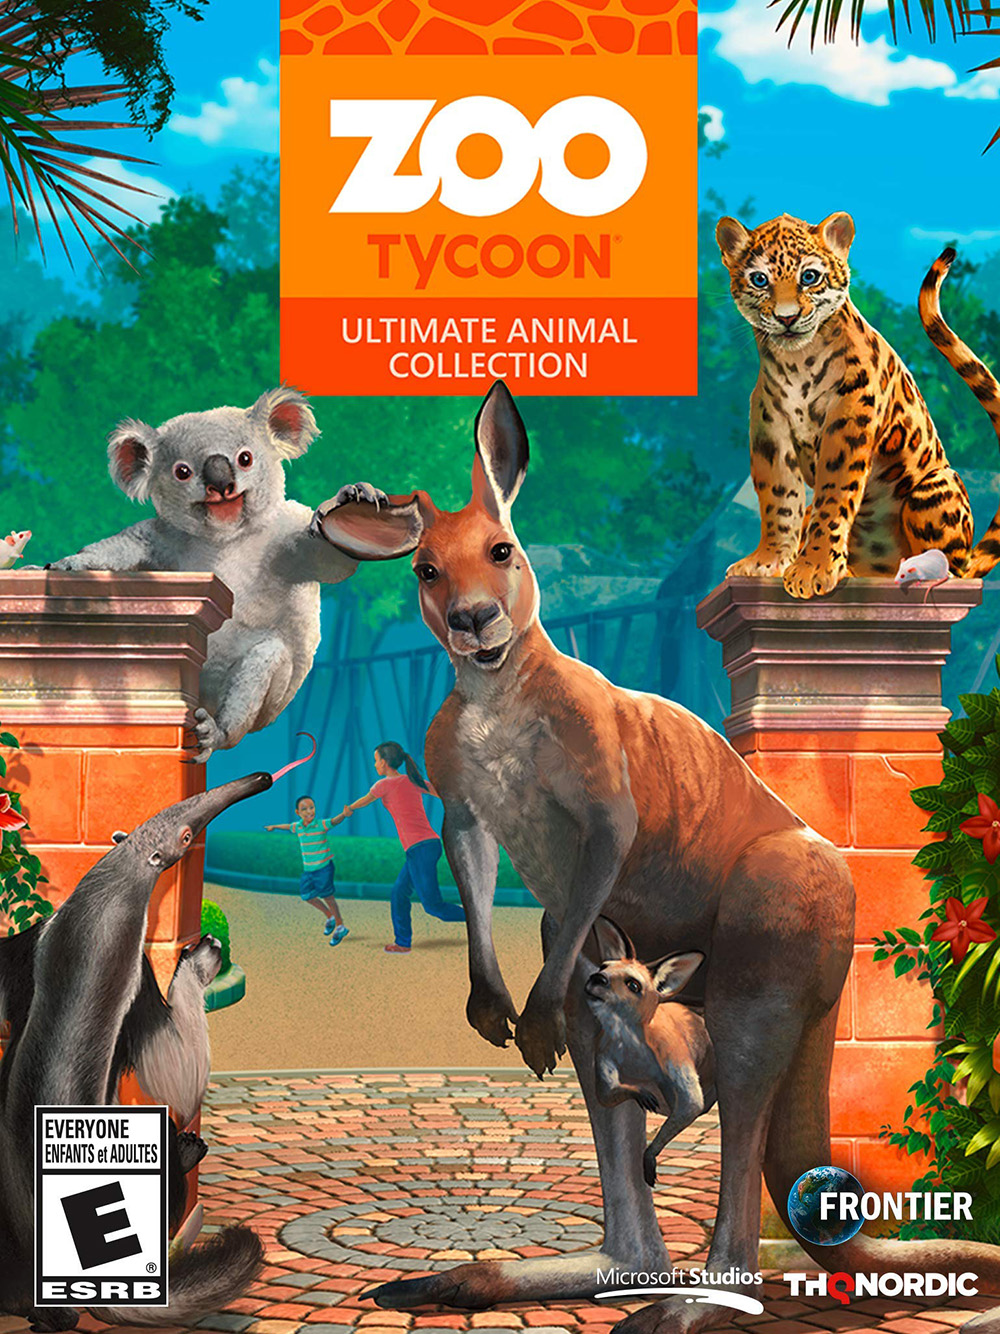 Zoo Tycoon: Ultimate Animal Collection [PC, Цифровая версия] (Цифровая версия) цена и фото